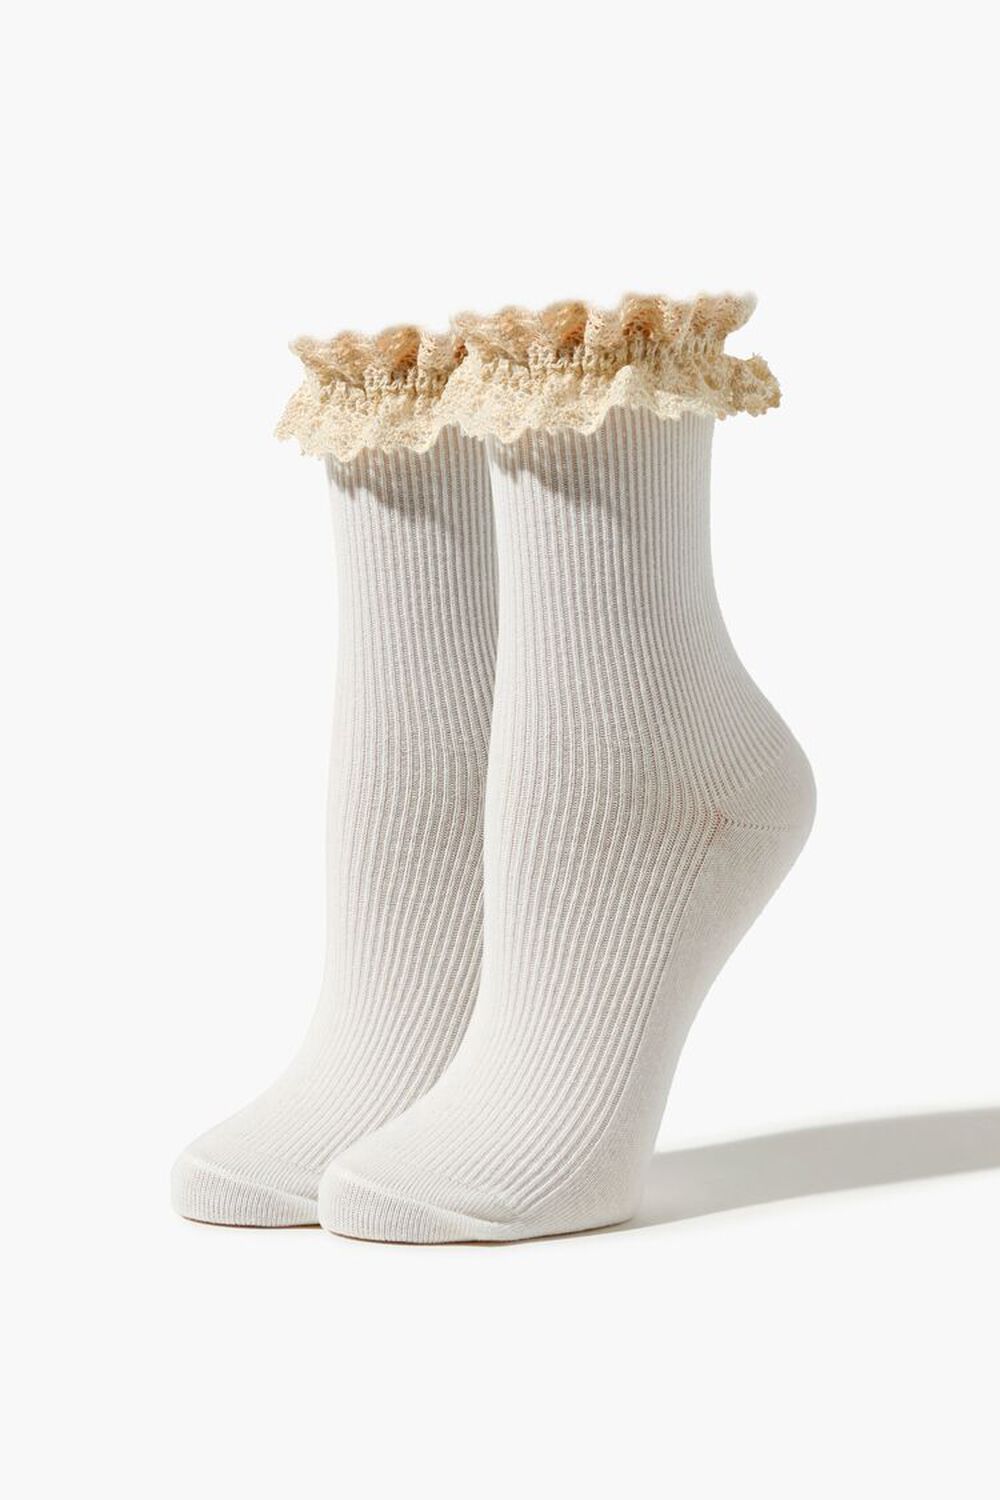 WHITE Ruffled Lace-Trim Crew Socks, image 1